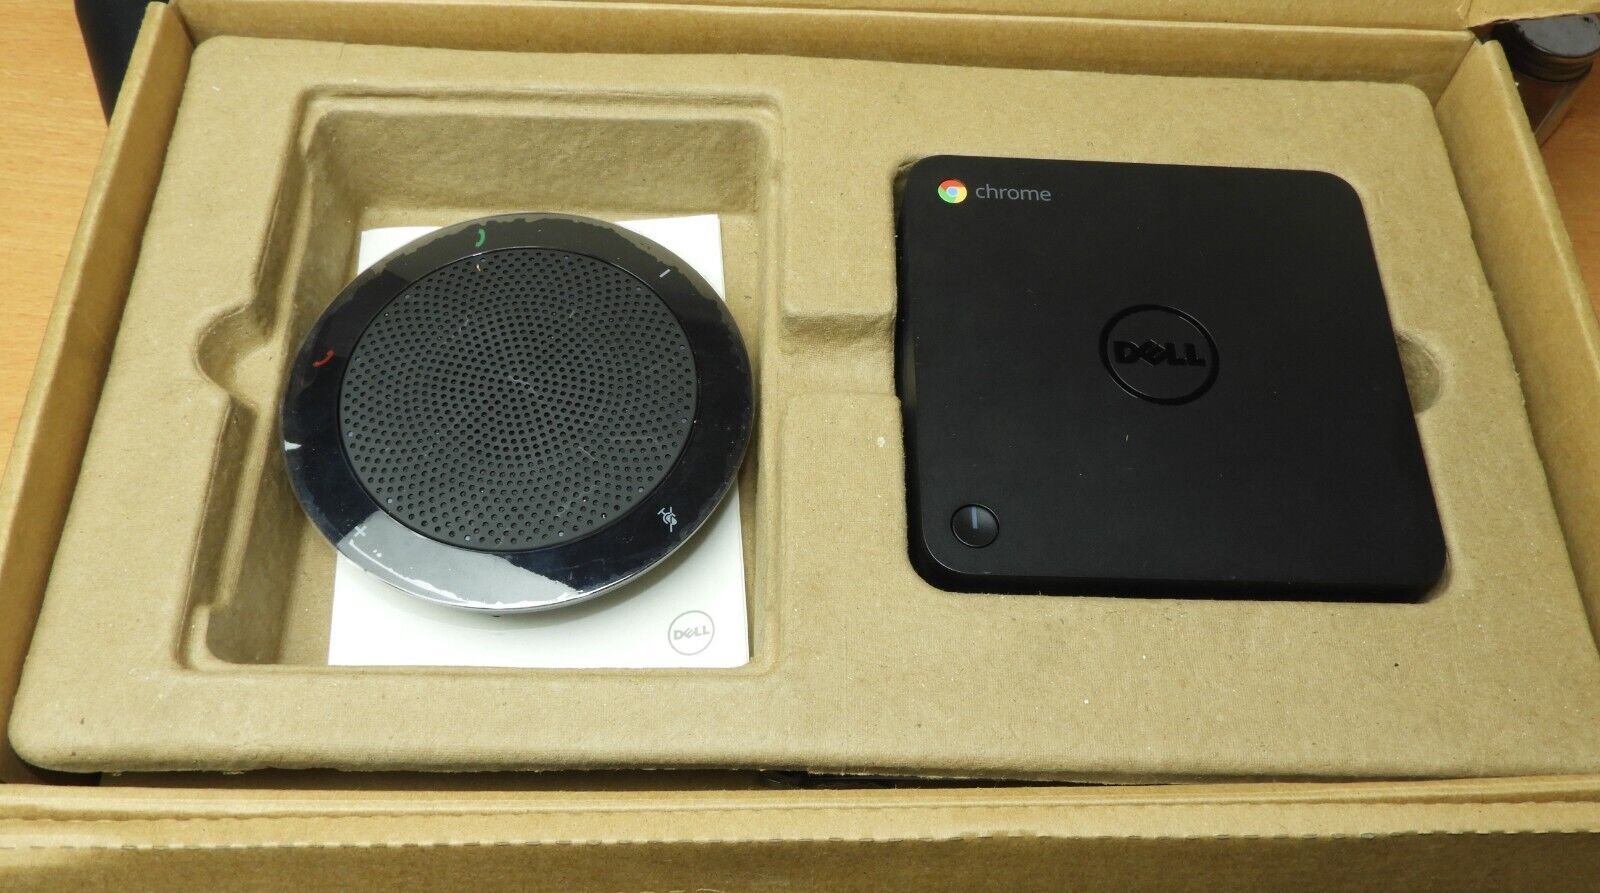 Dell Chromebox 3010 Z01V Core i7 with Remote, Speaker and Camera